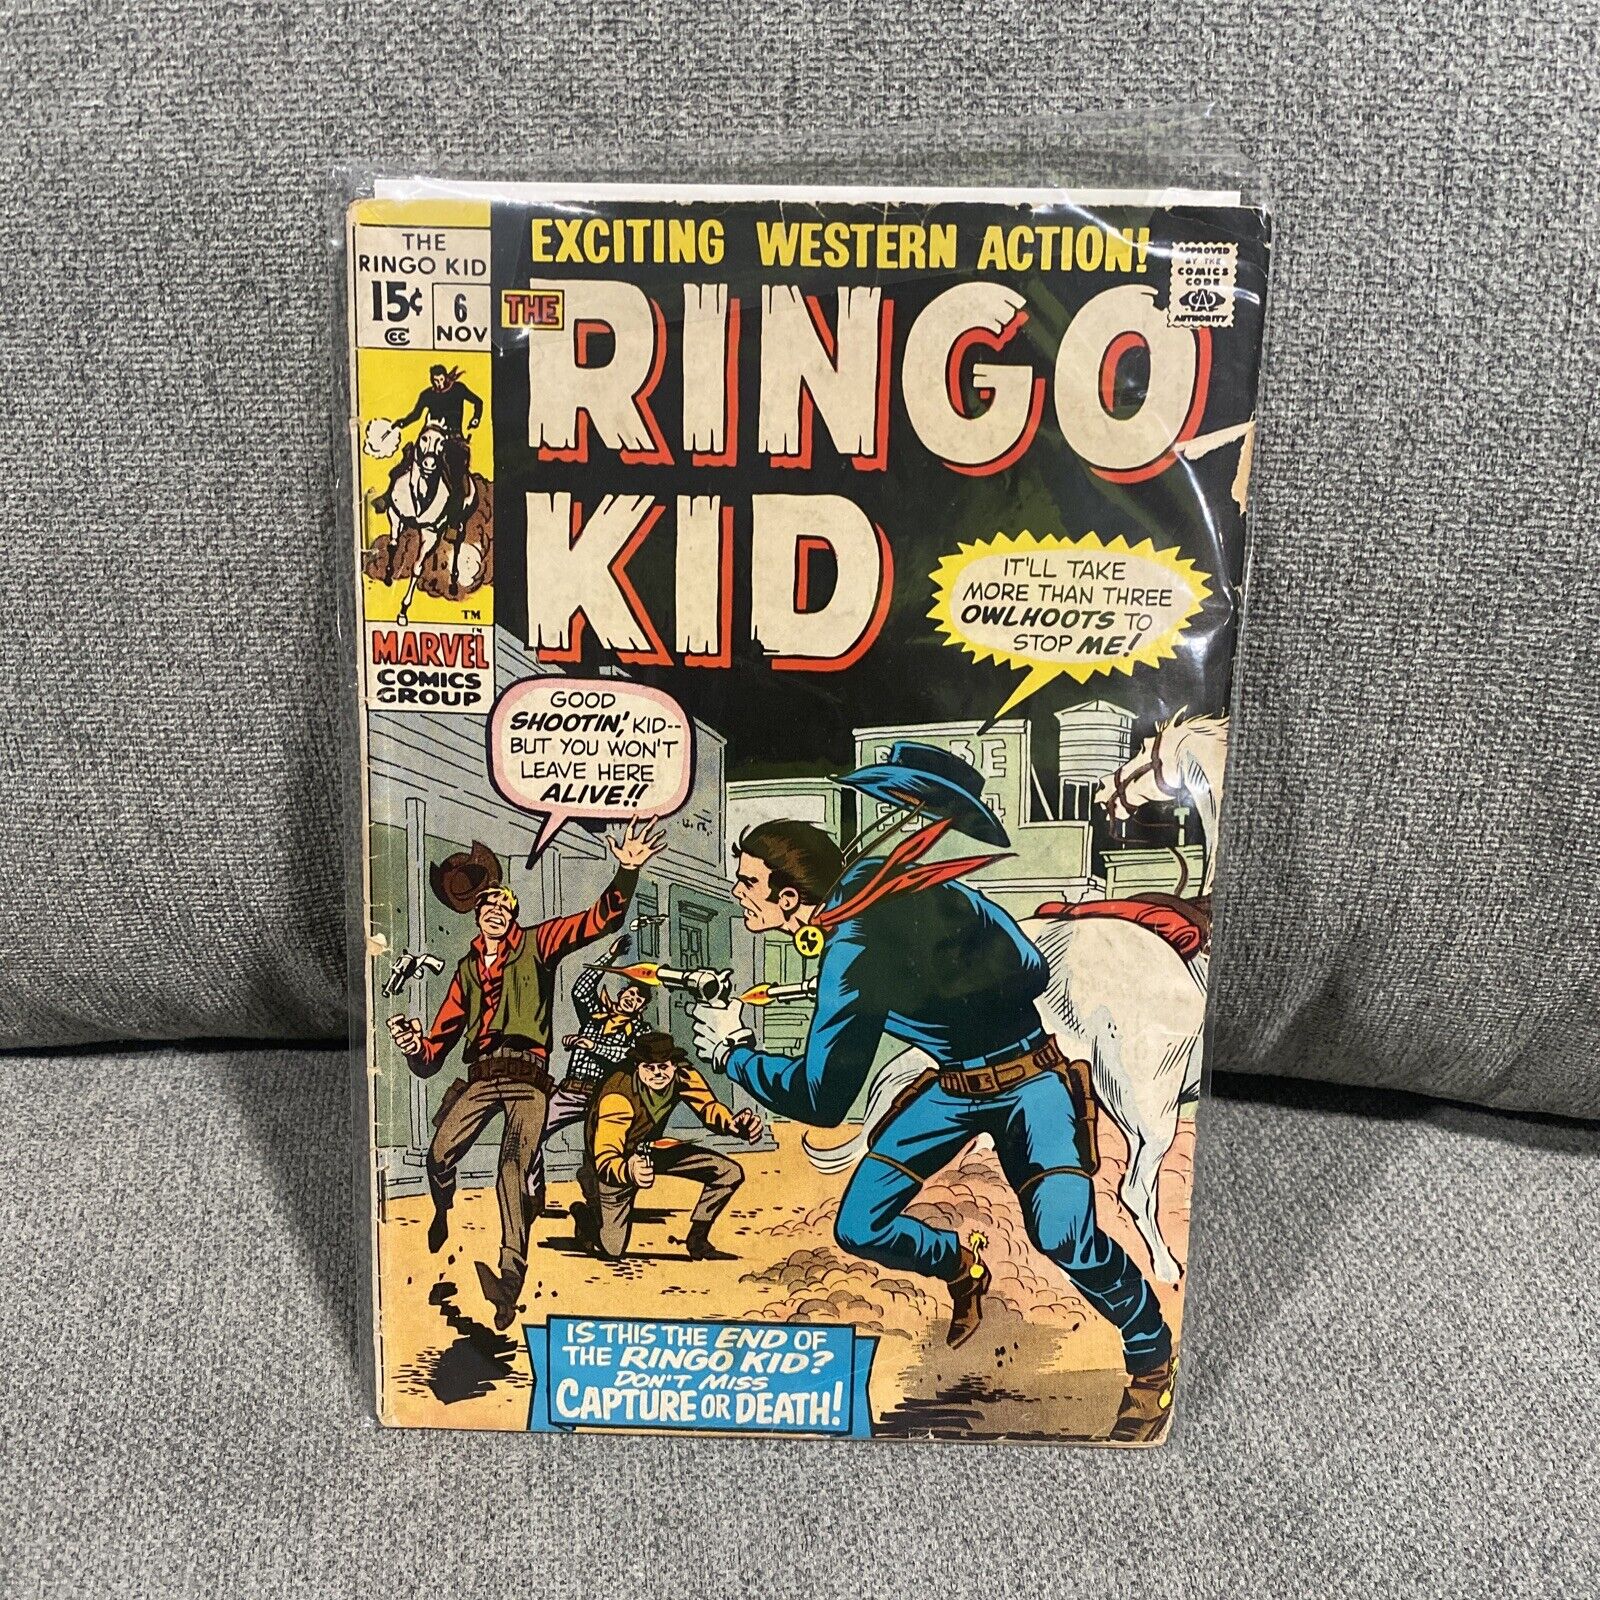 THE RINGO KID #6 CAPTURE OR DEATH?  1970